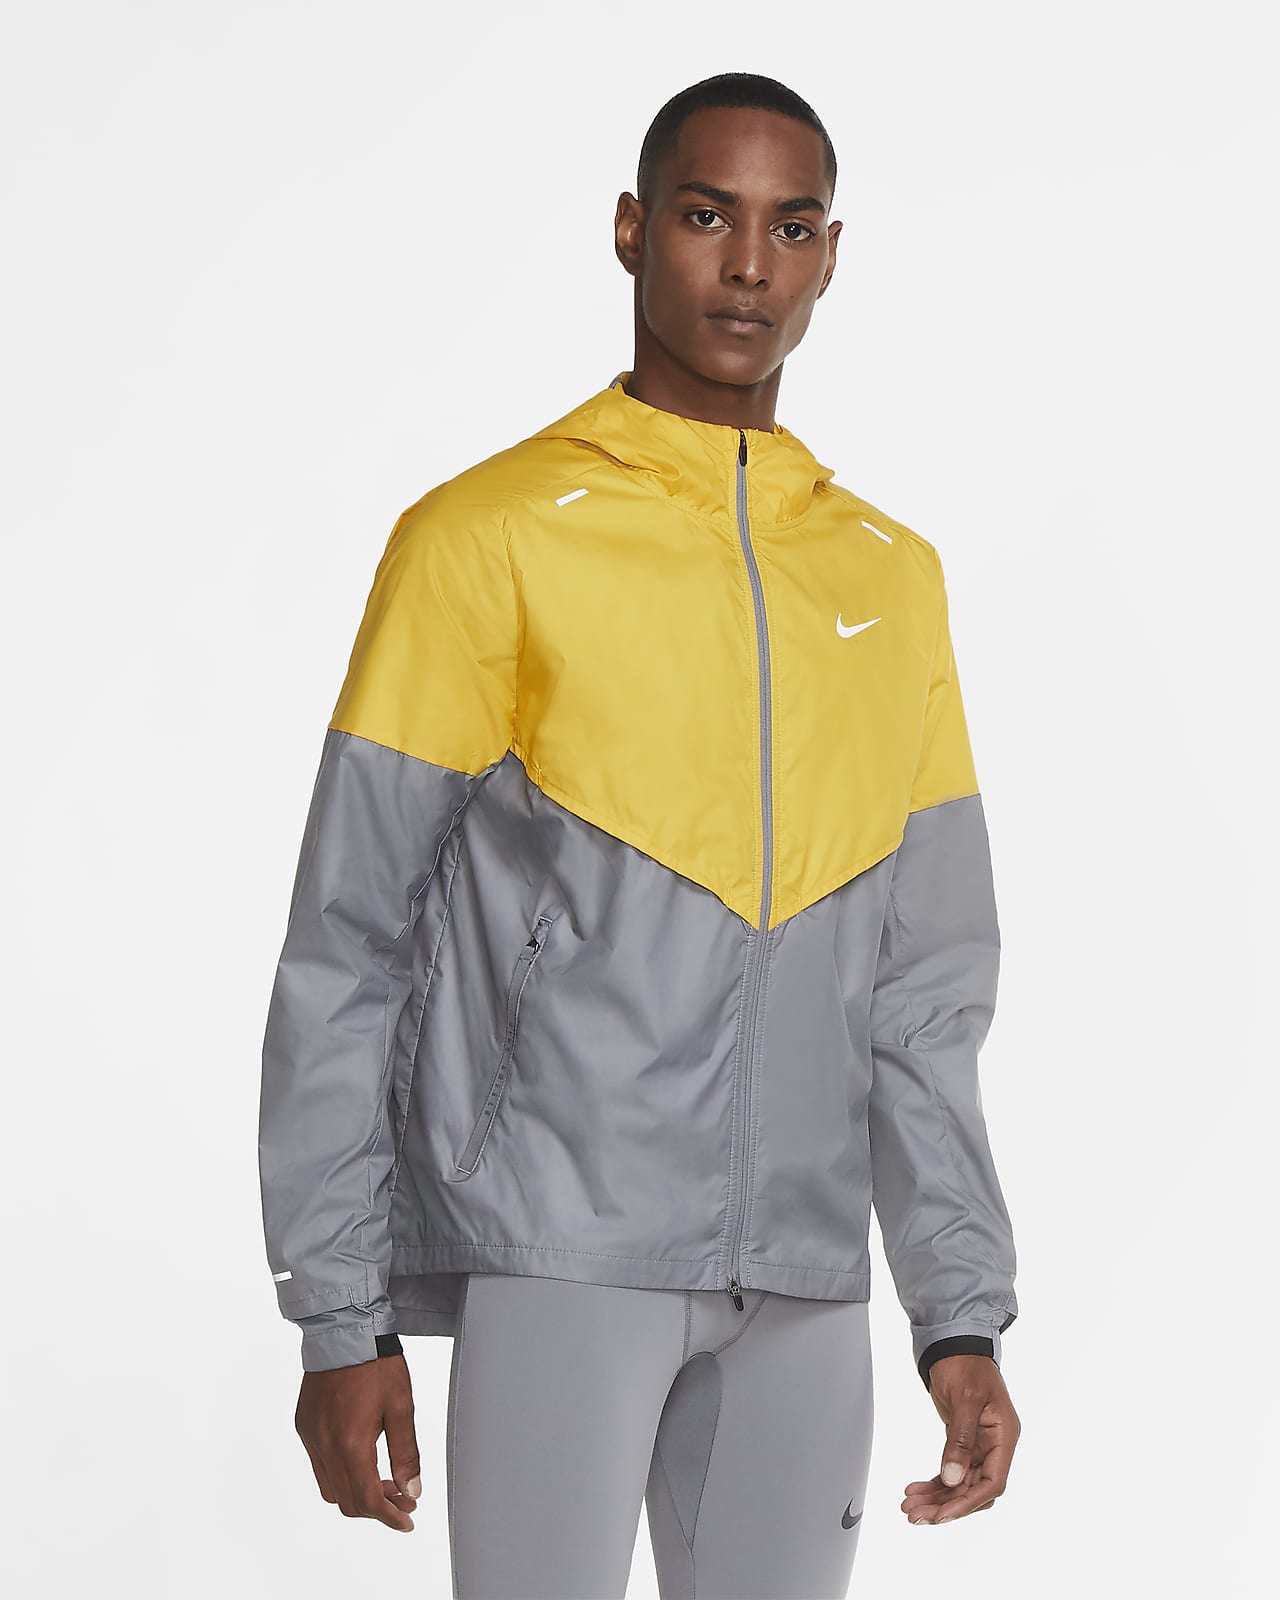 Nike Shieldrunner Men's Running Jacket 